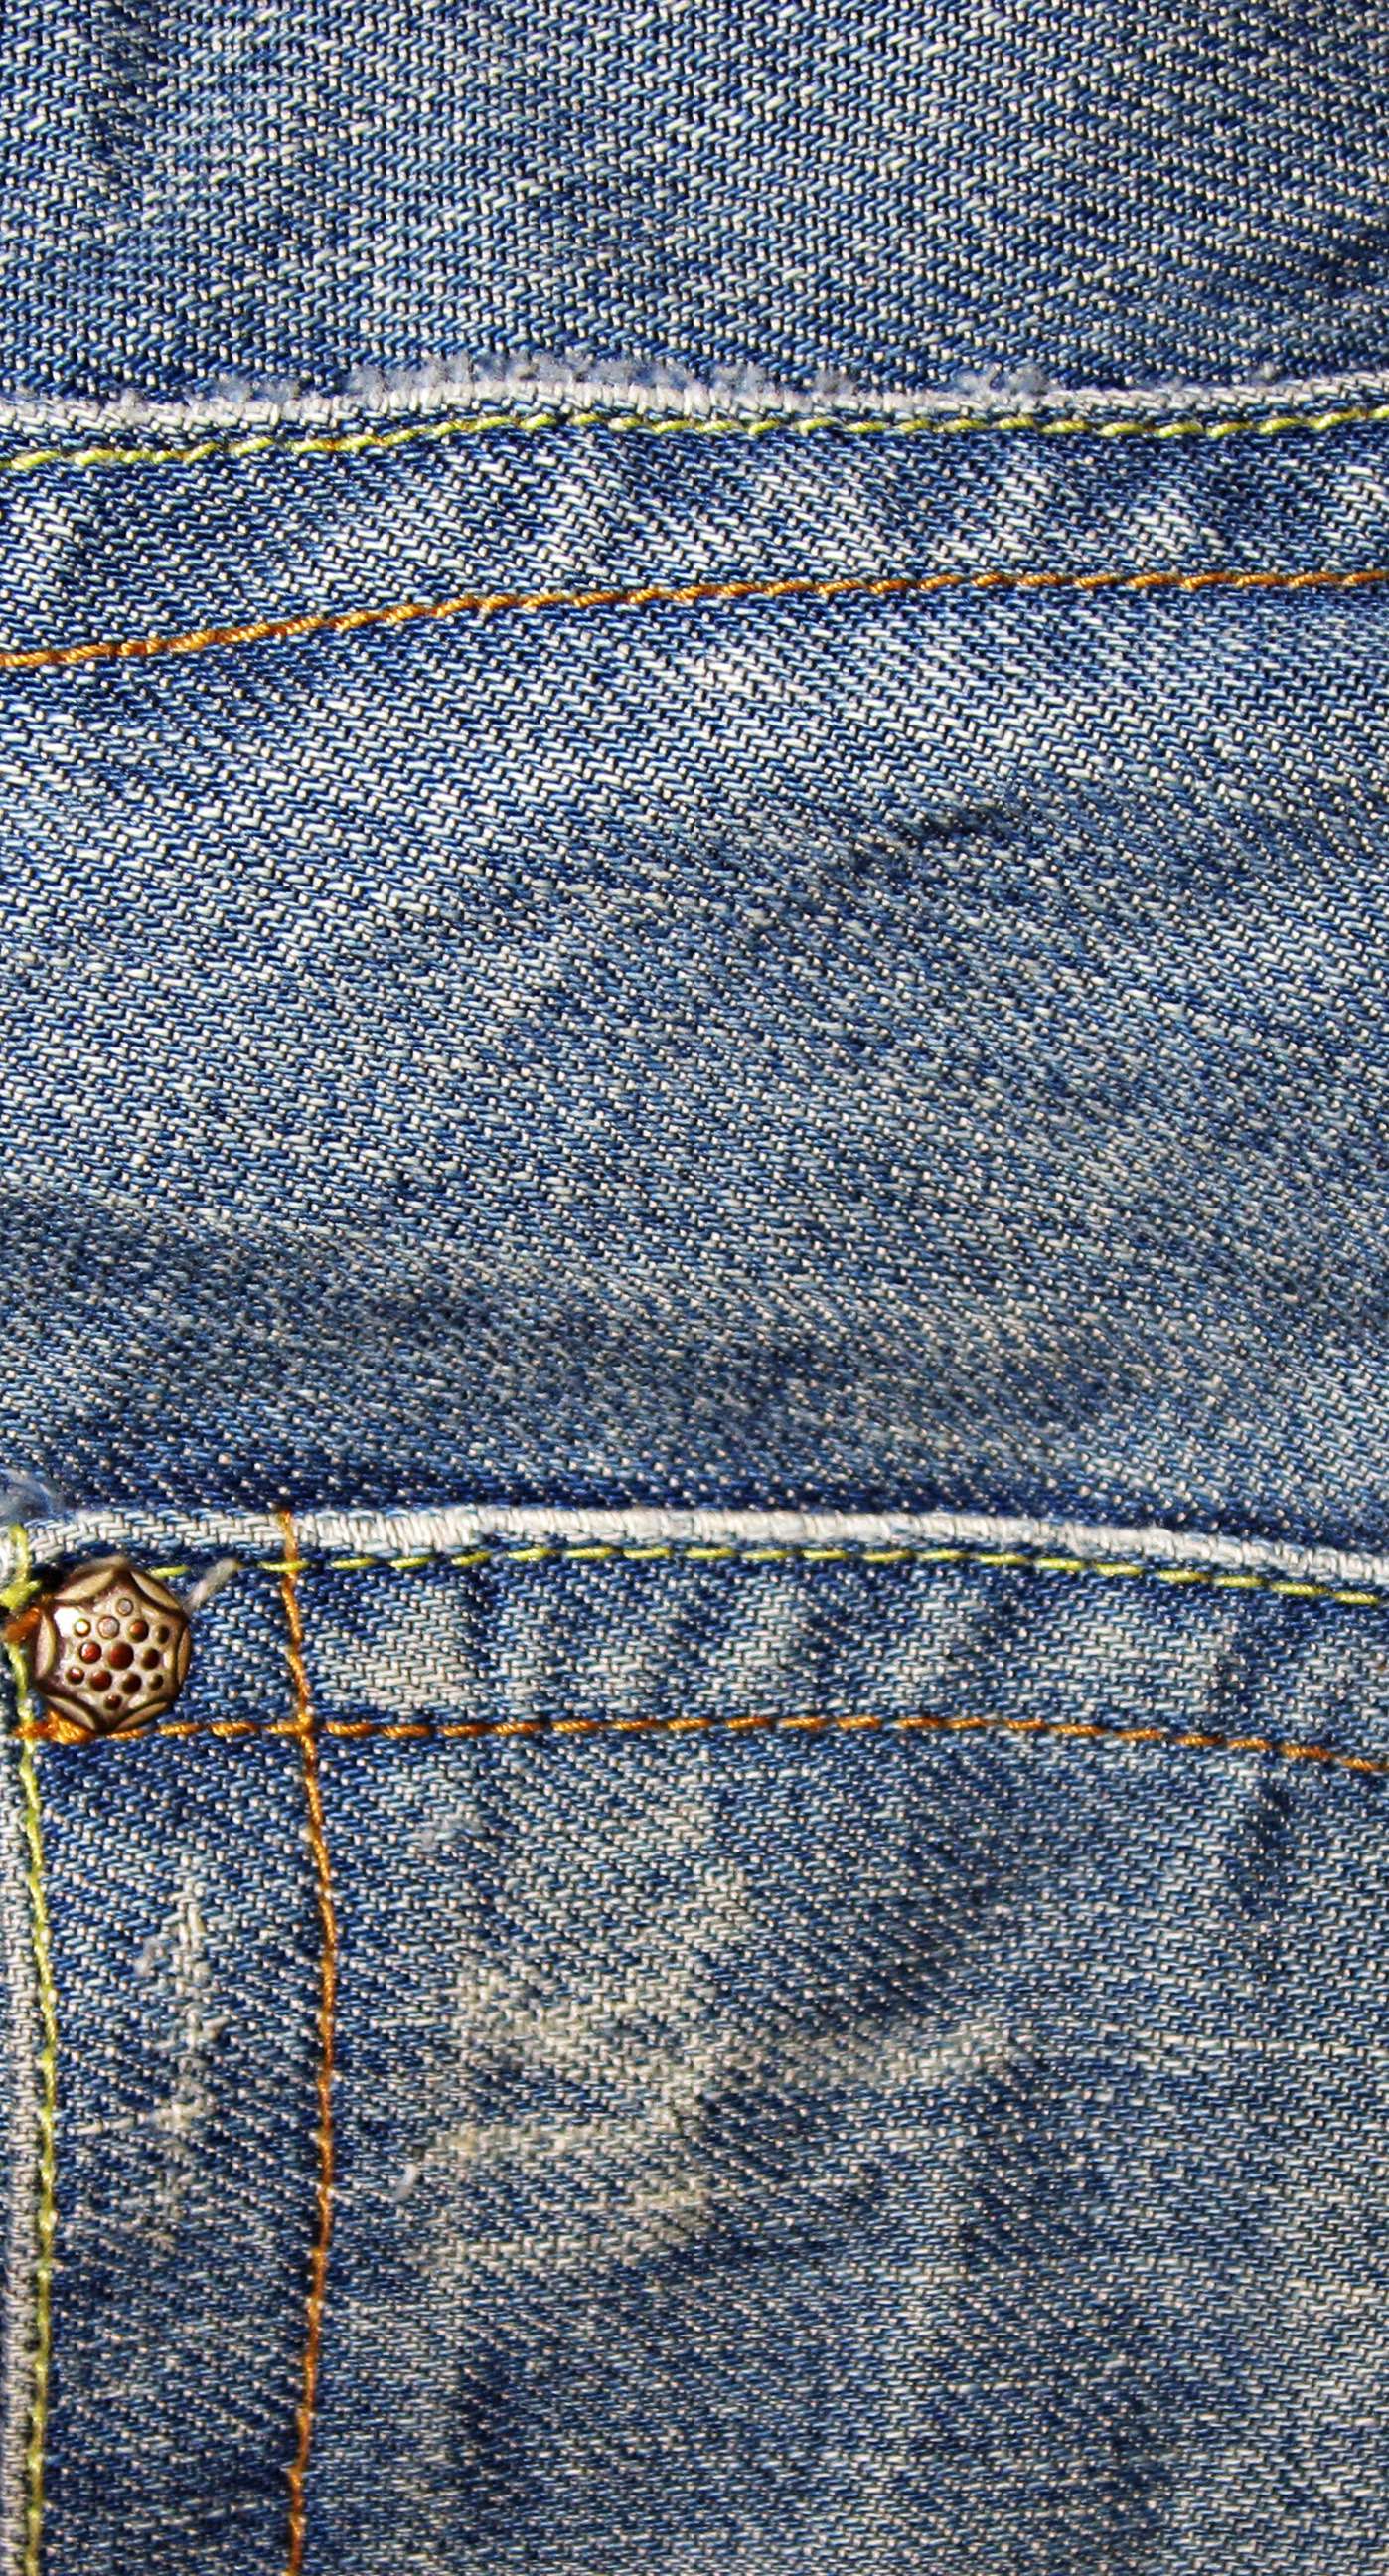 blue jeans stone washed frayed fabric | Denim wallpaper, Denim background,  Cellphone wallpaper